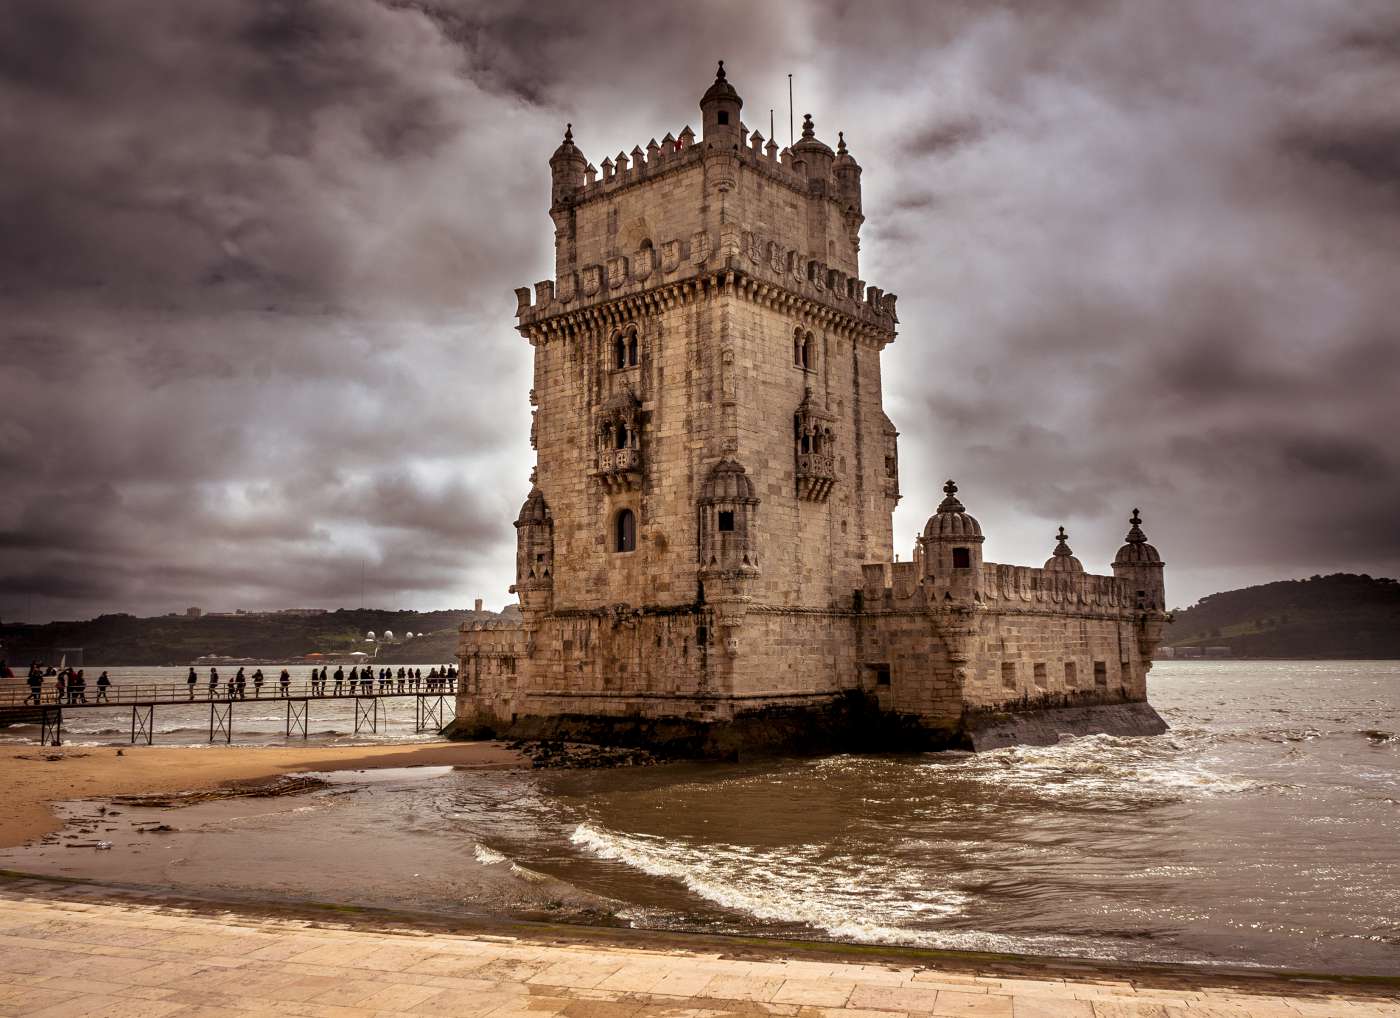 Torre de Belém - Πύργος Belém 